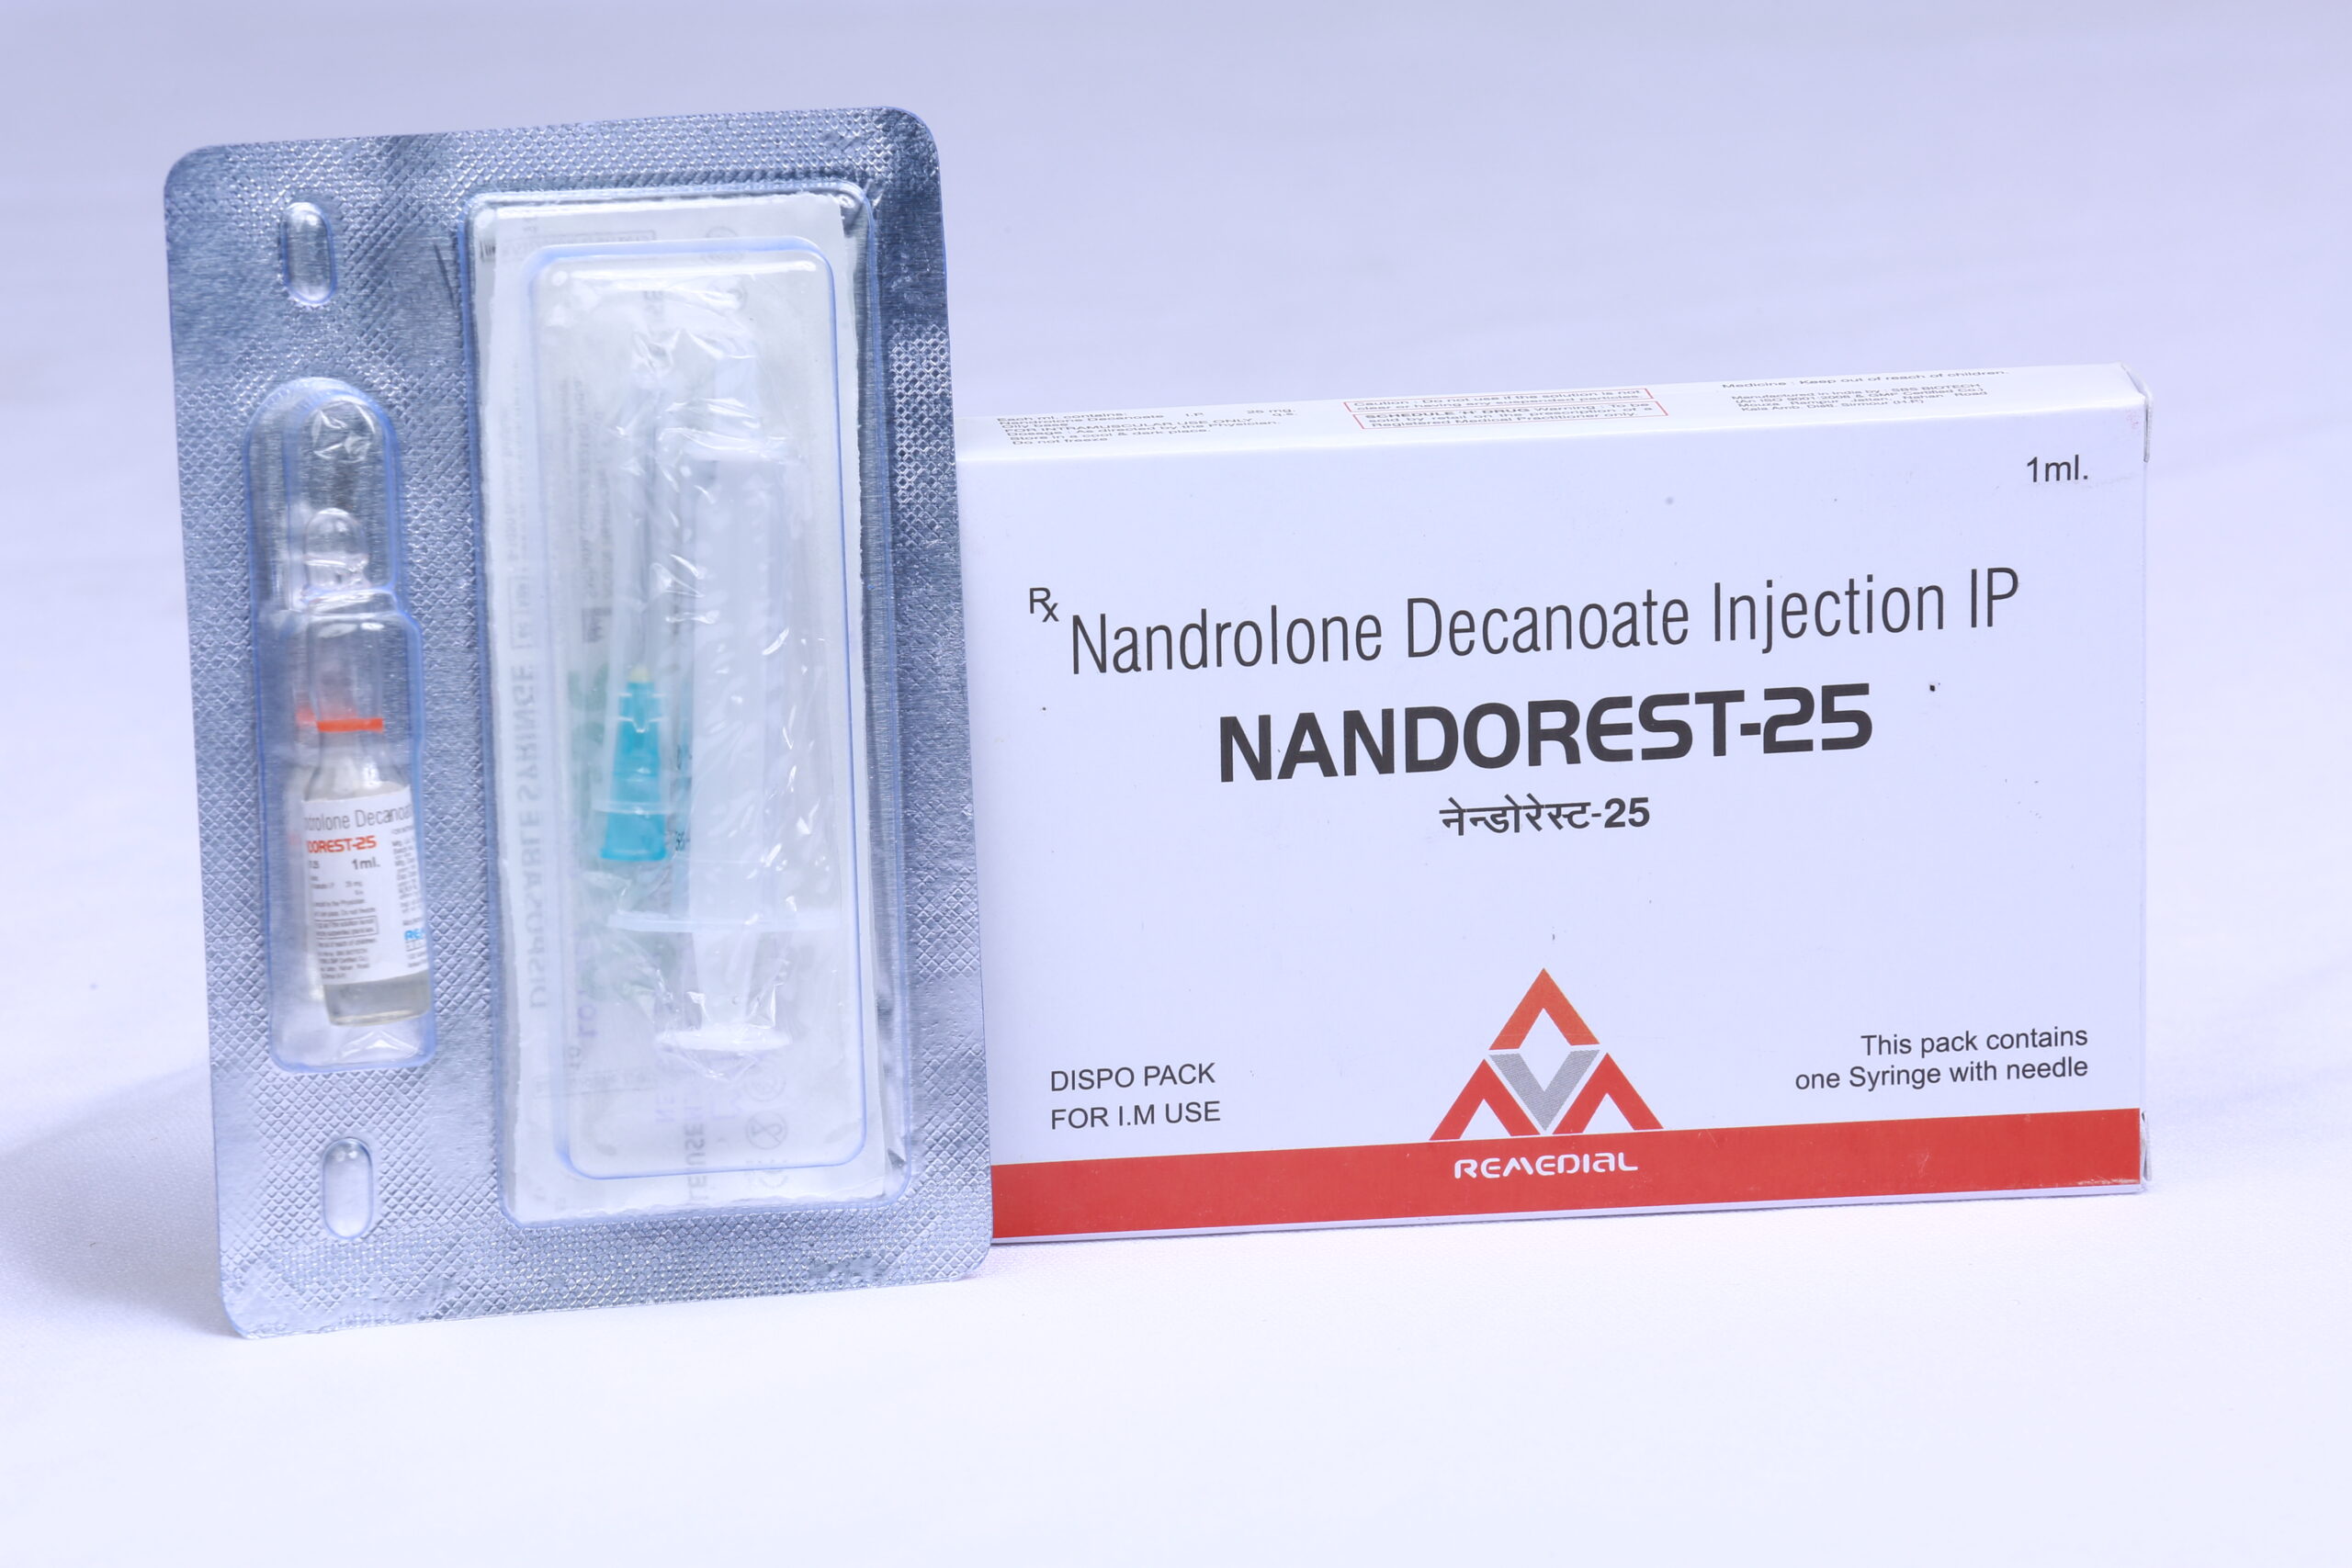 NANDOREST-25 (Nandrolone Decanoate 25mg)